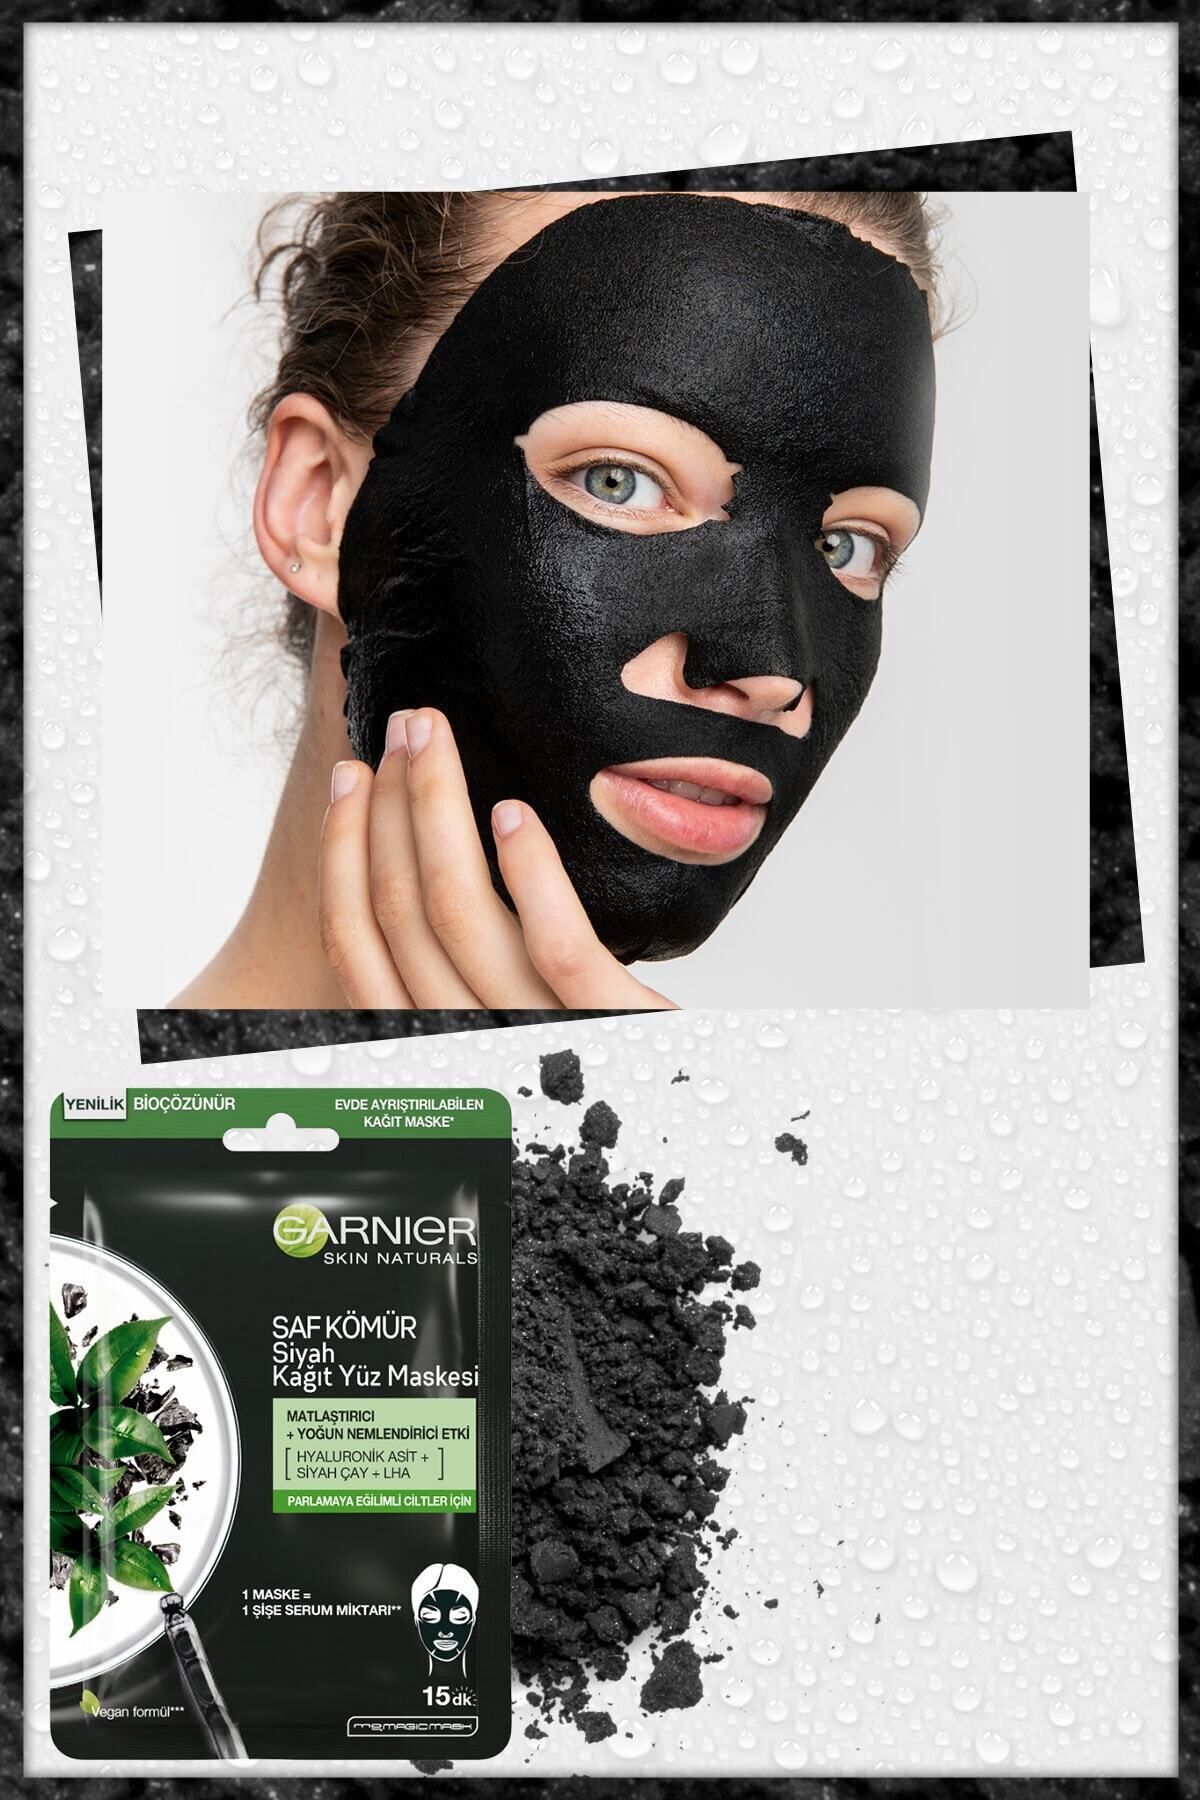 Garnier ماسک صورت طبیعی با برگه های کاغذی چای سیاه